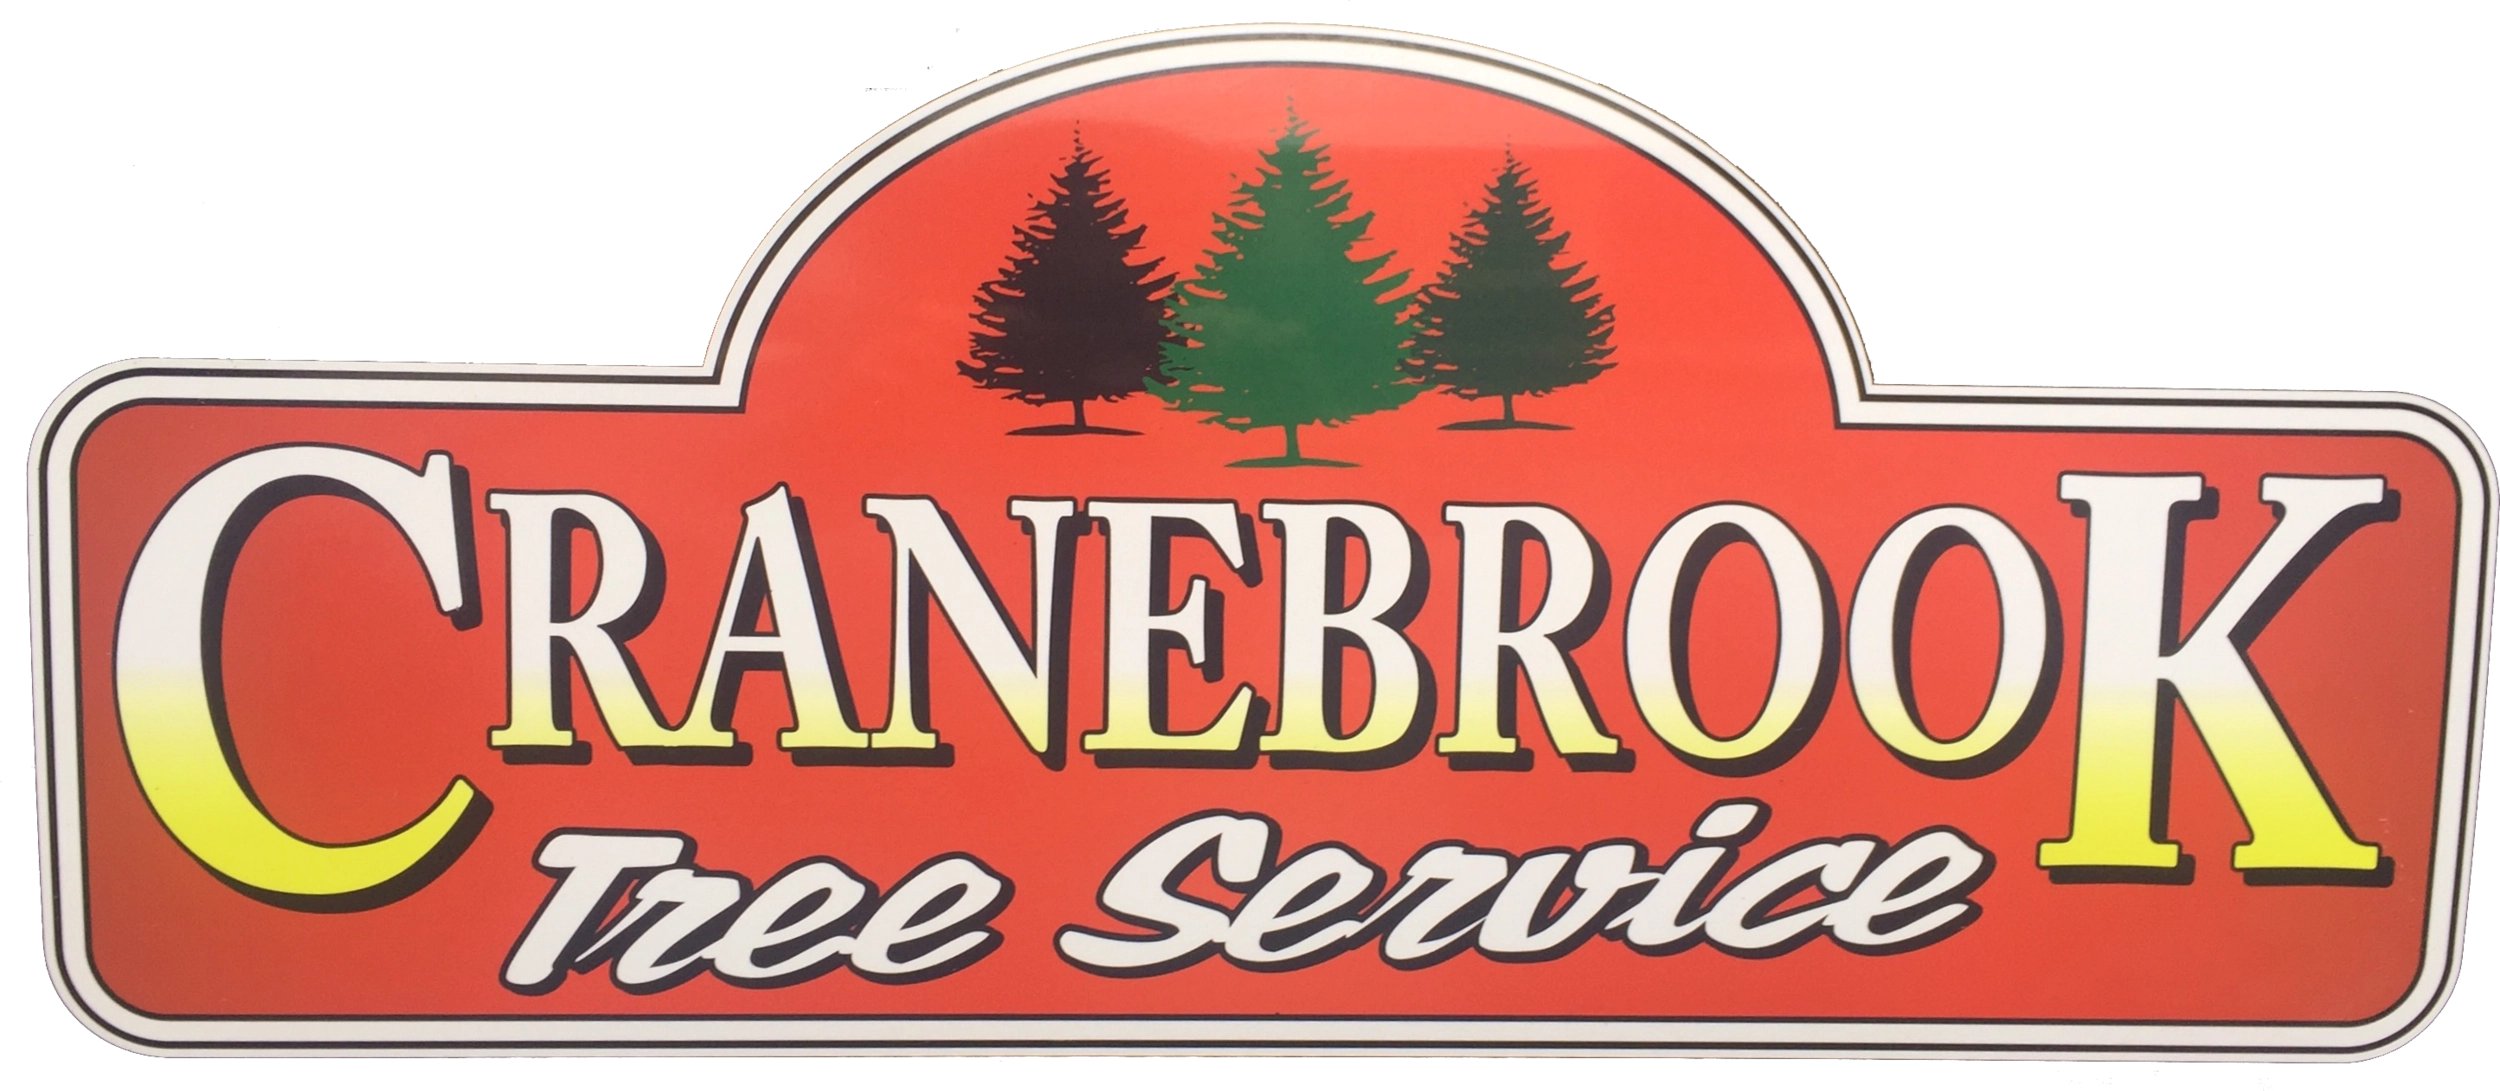 Cranebrook Tree Service & Tree Farm Logo